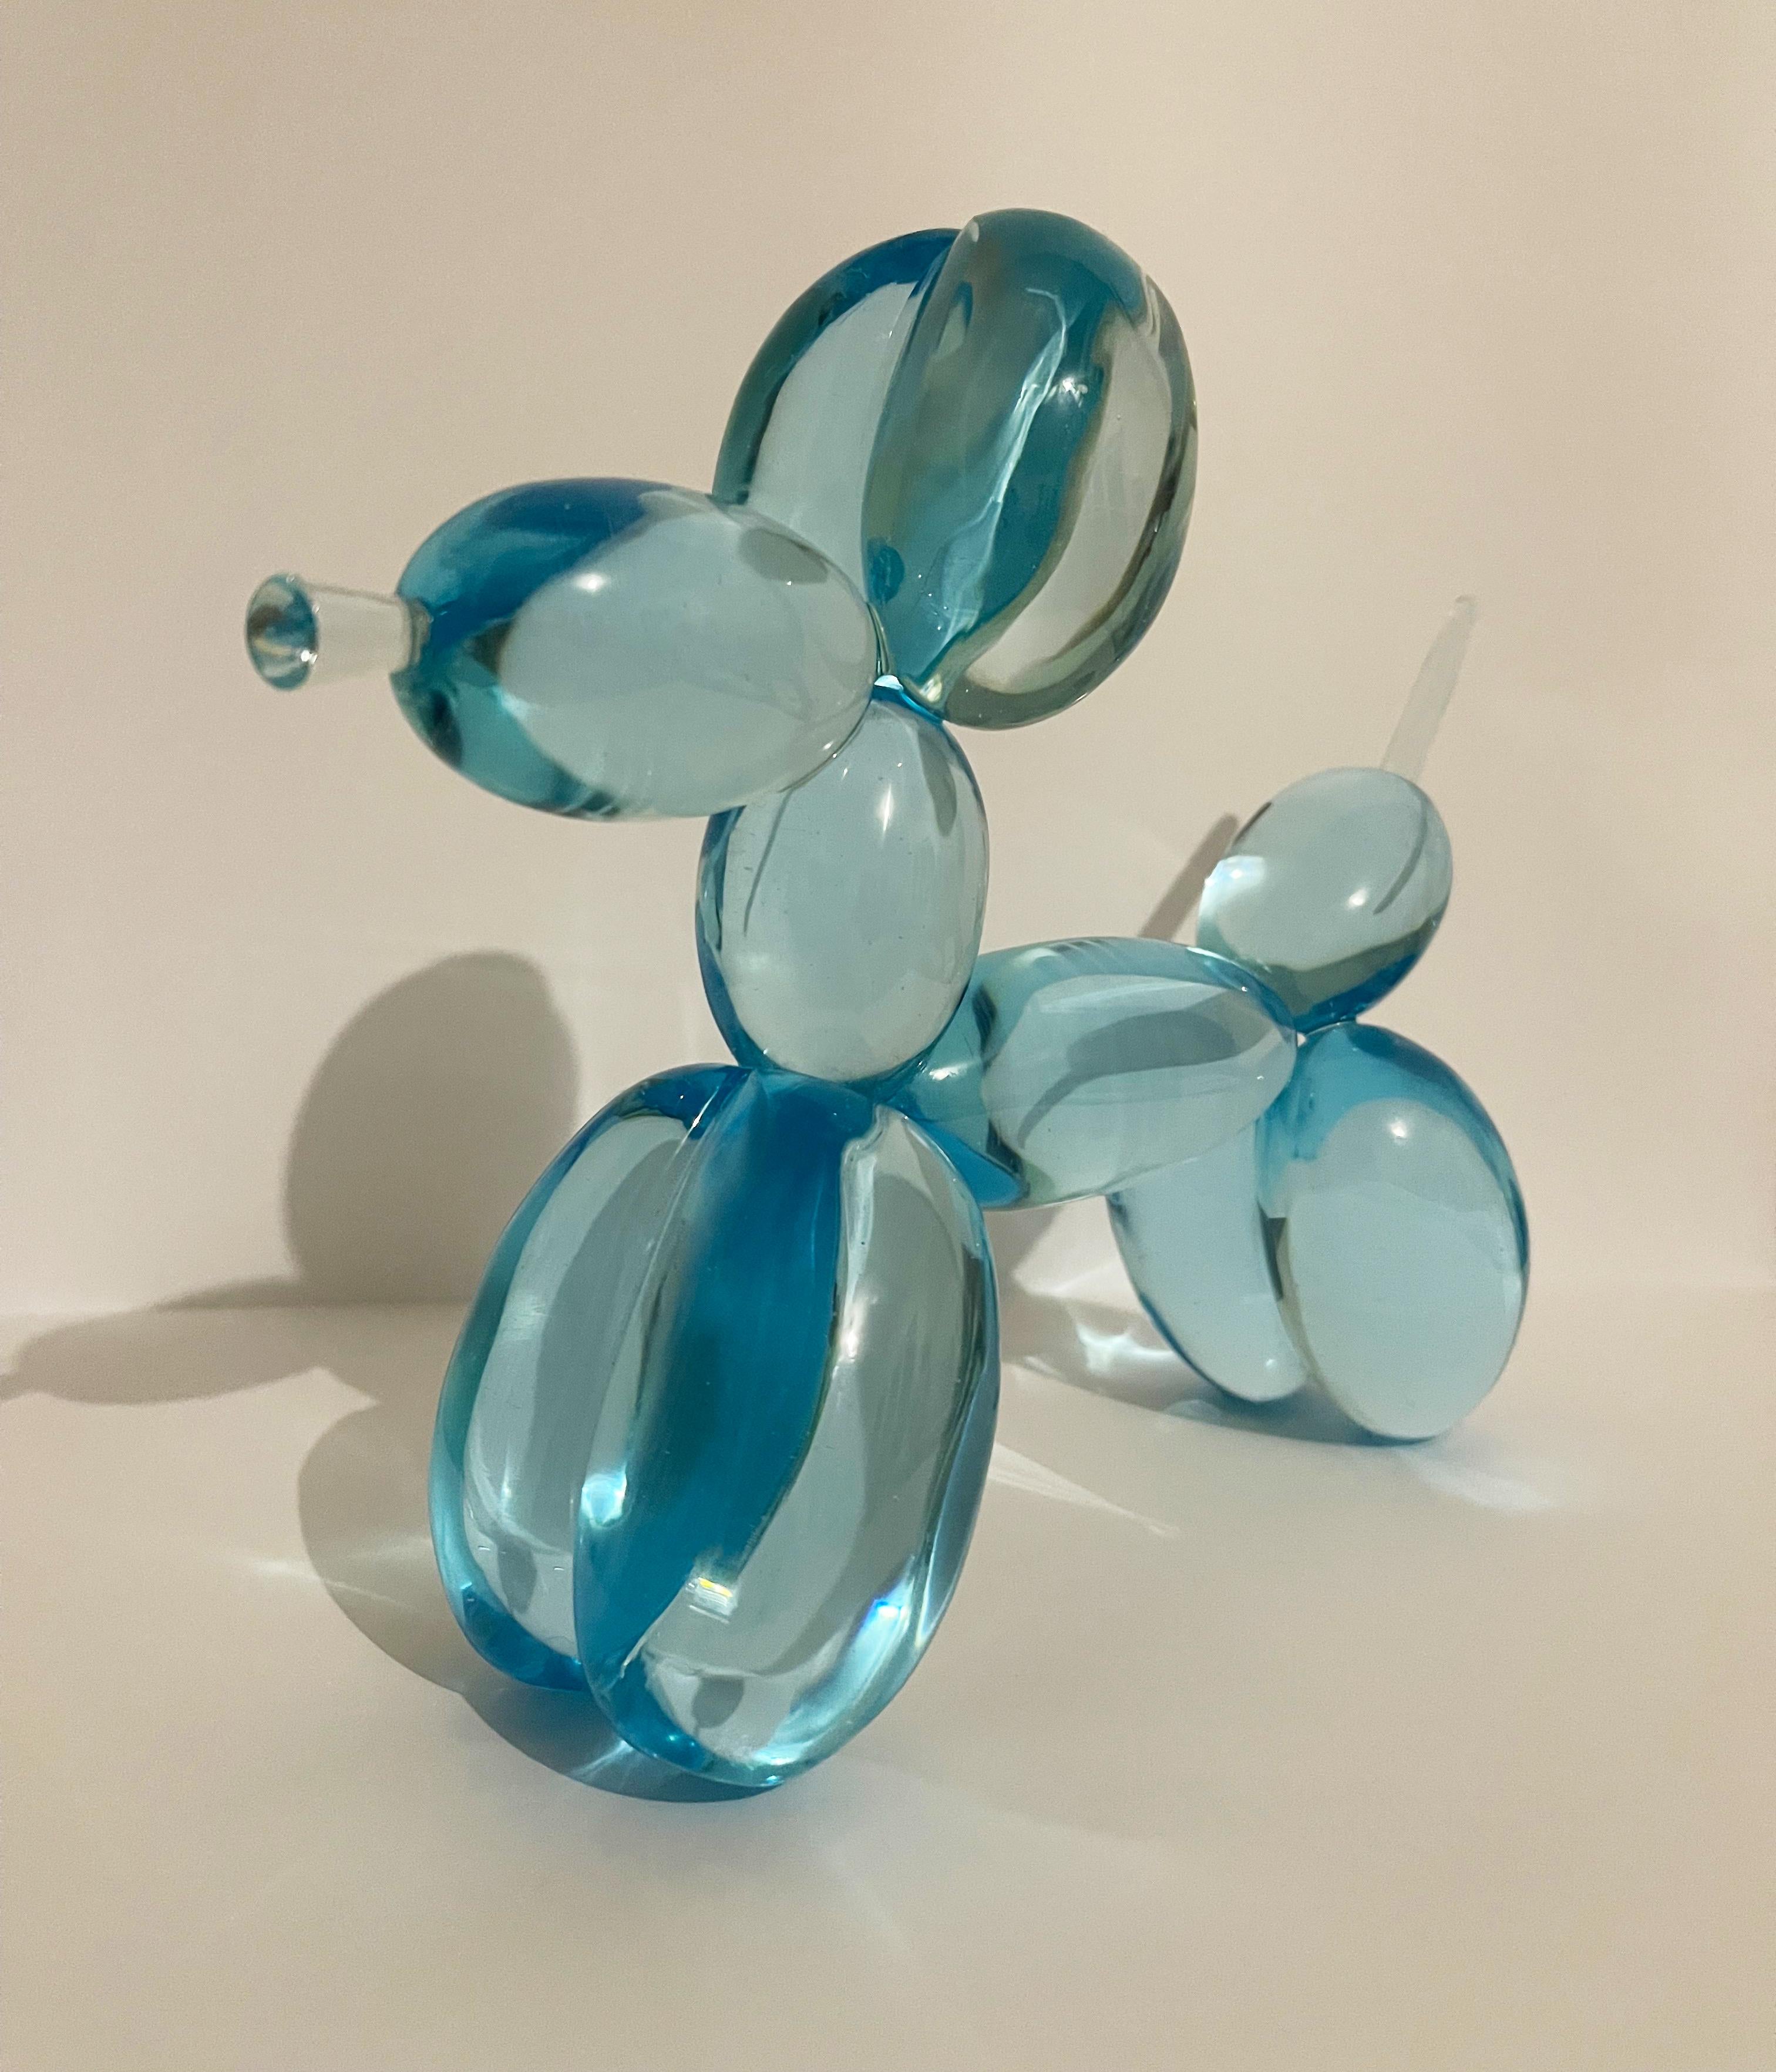 Contemporary 'Dog' Handmade Light Blue Crystal Sculpture by Ghirò Studio 5